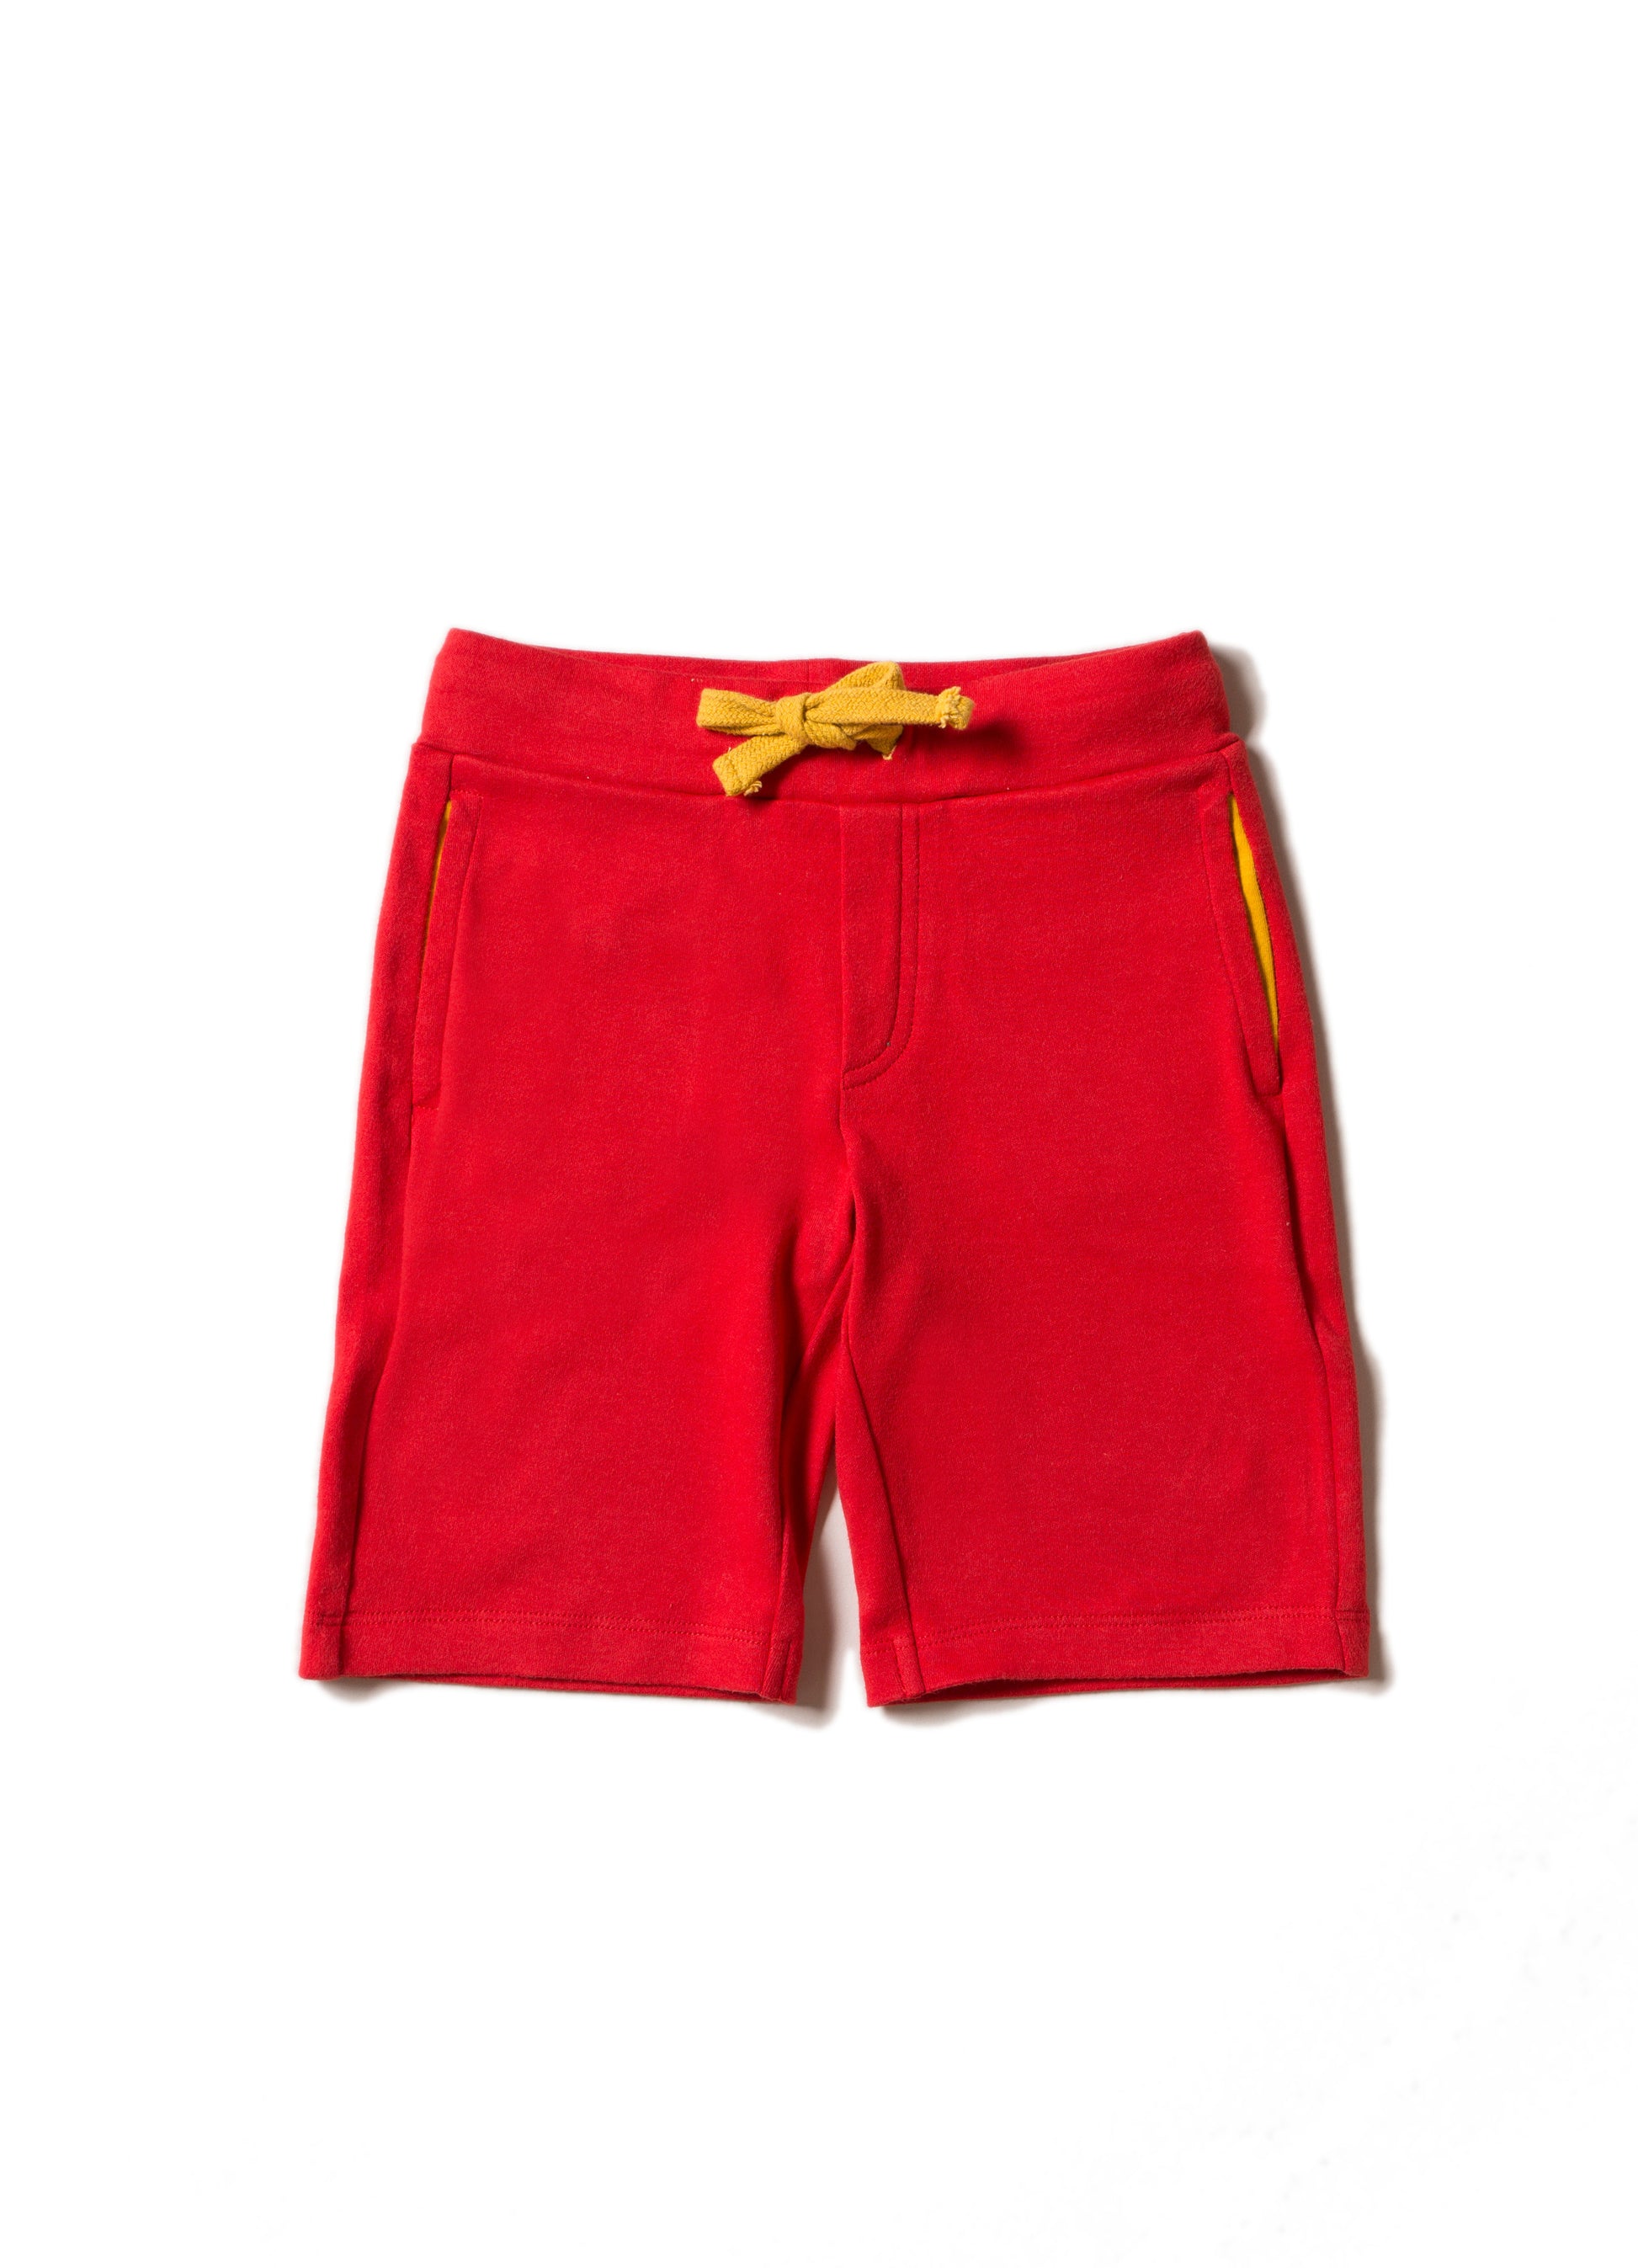 LGR Red Jersey Beach Shorts